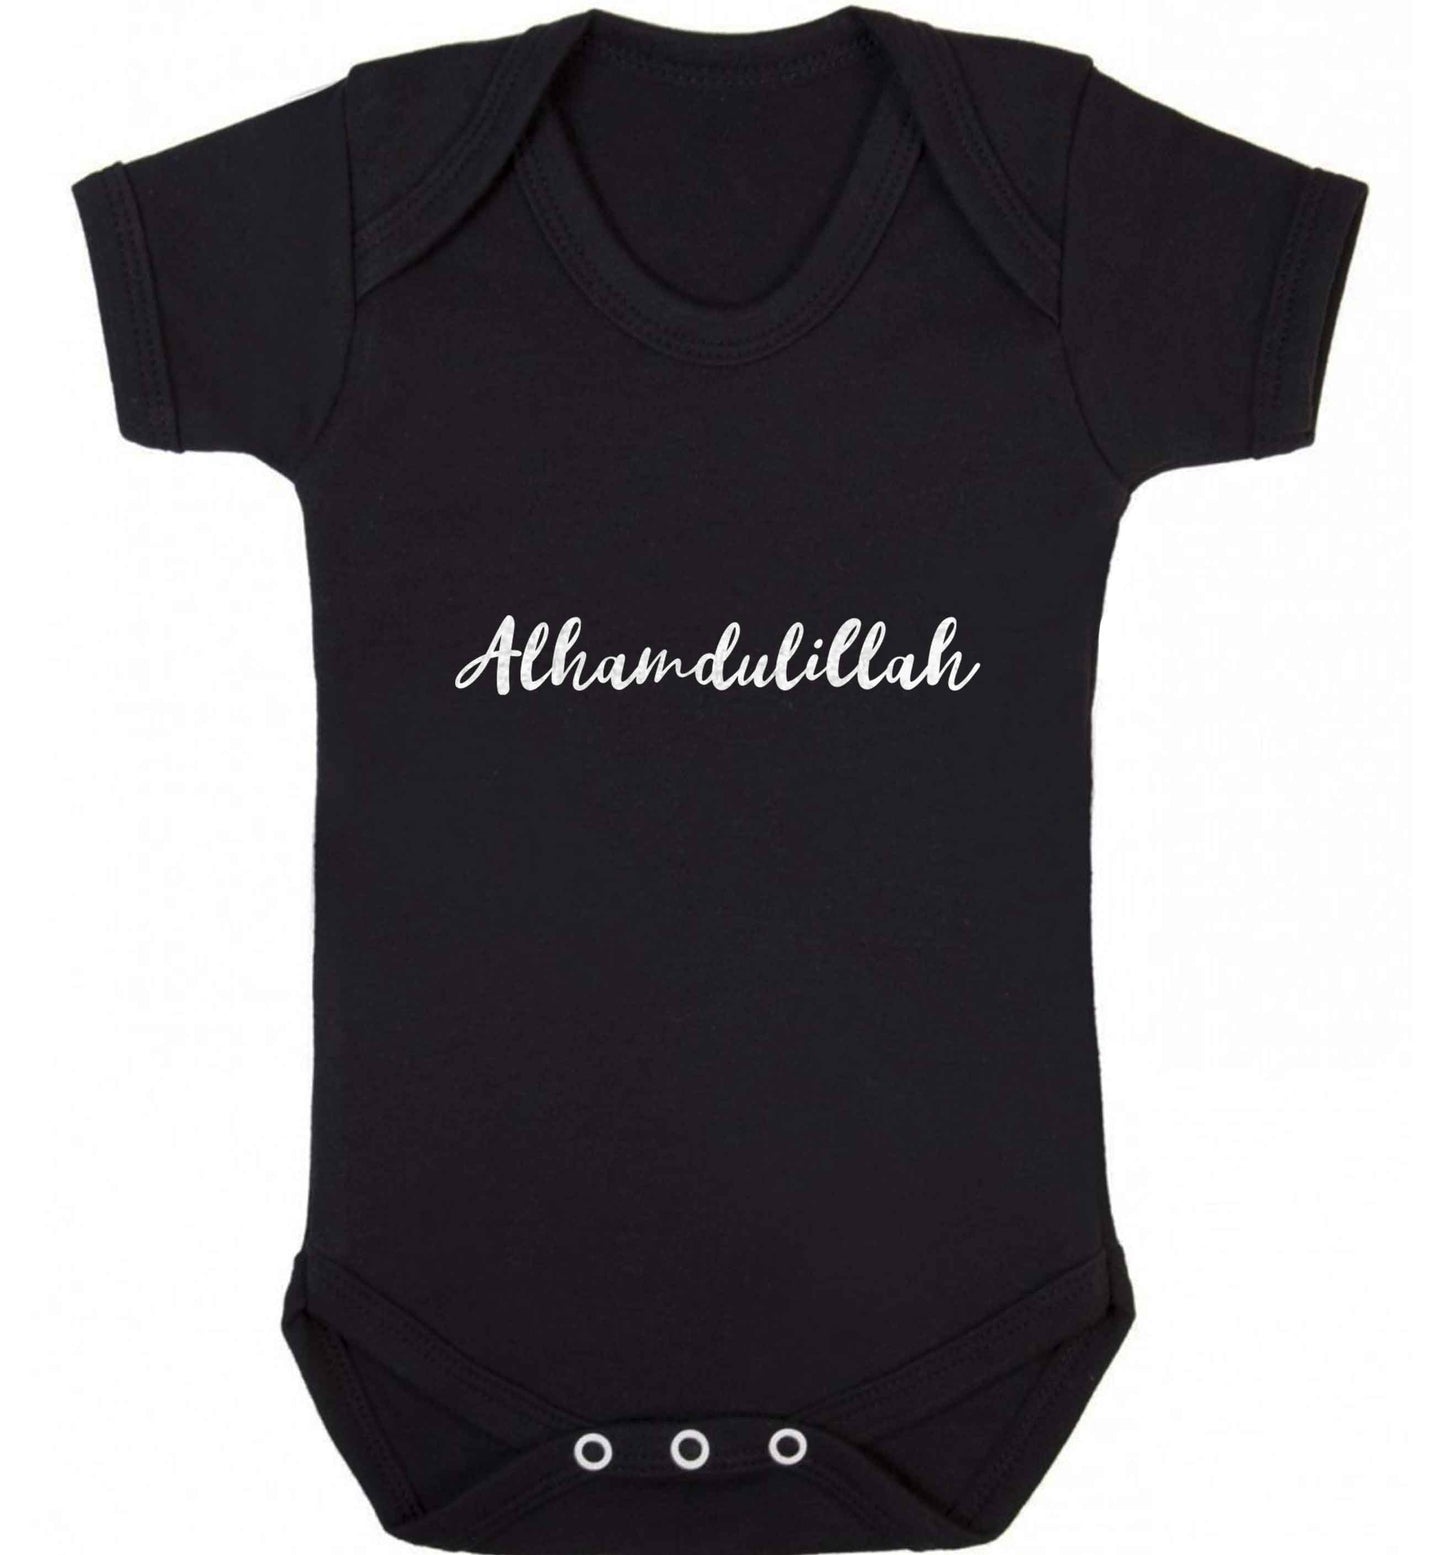 alhamdulillah baby vest black 18-24 months